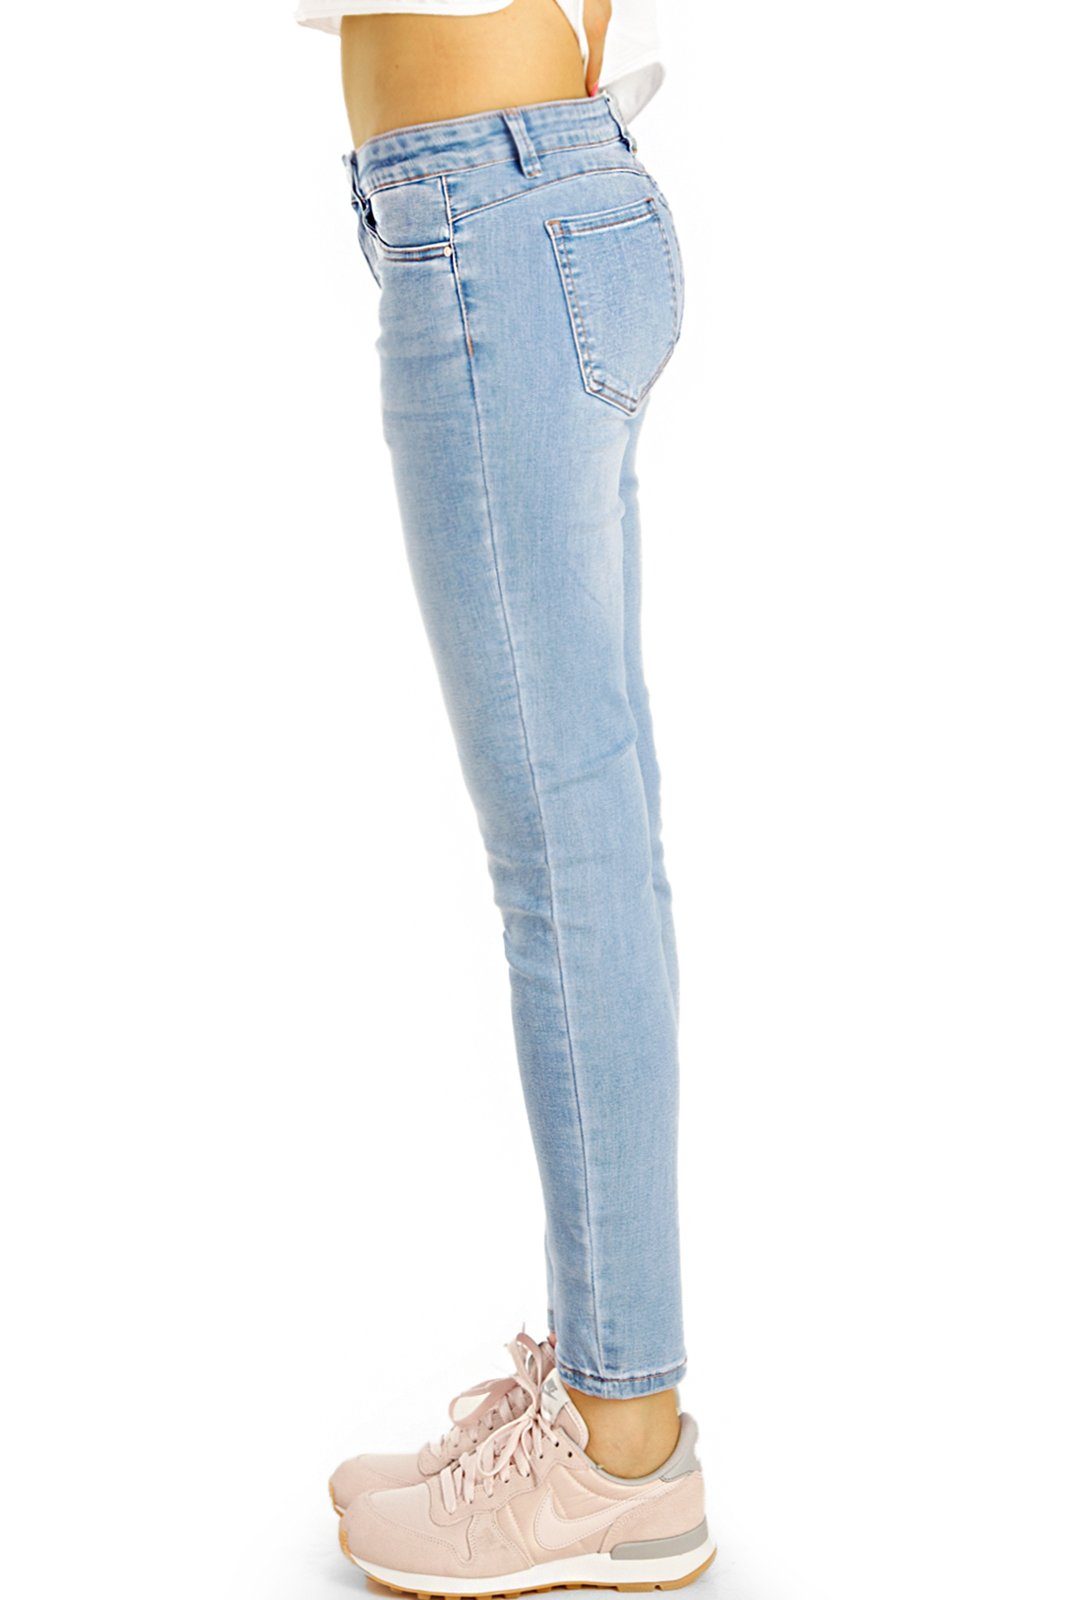 Stretch-Anteil, j27p-1 Damen- styled be Skinny Stretch dunkelblau - Hose 5-Pocket-Style - Low-rise-Jeans slim Hüftjeans mit Röhrenjeans